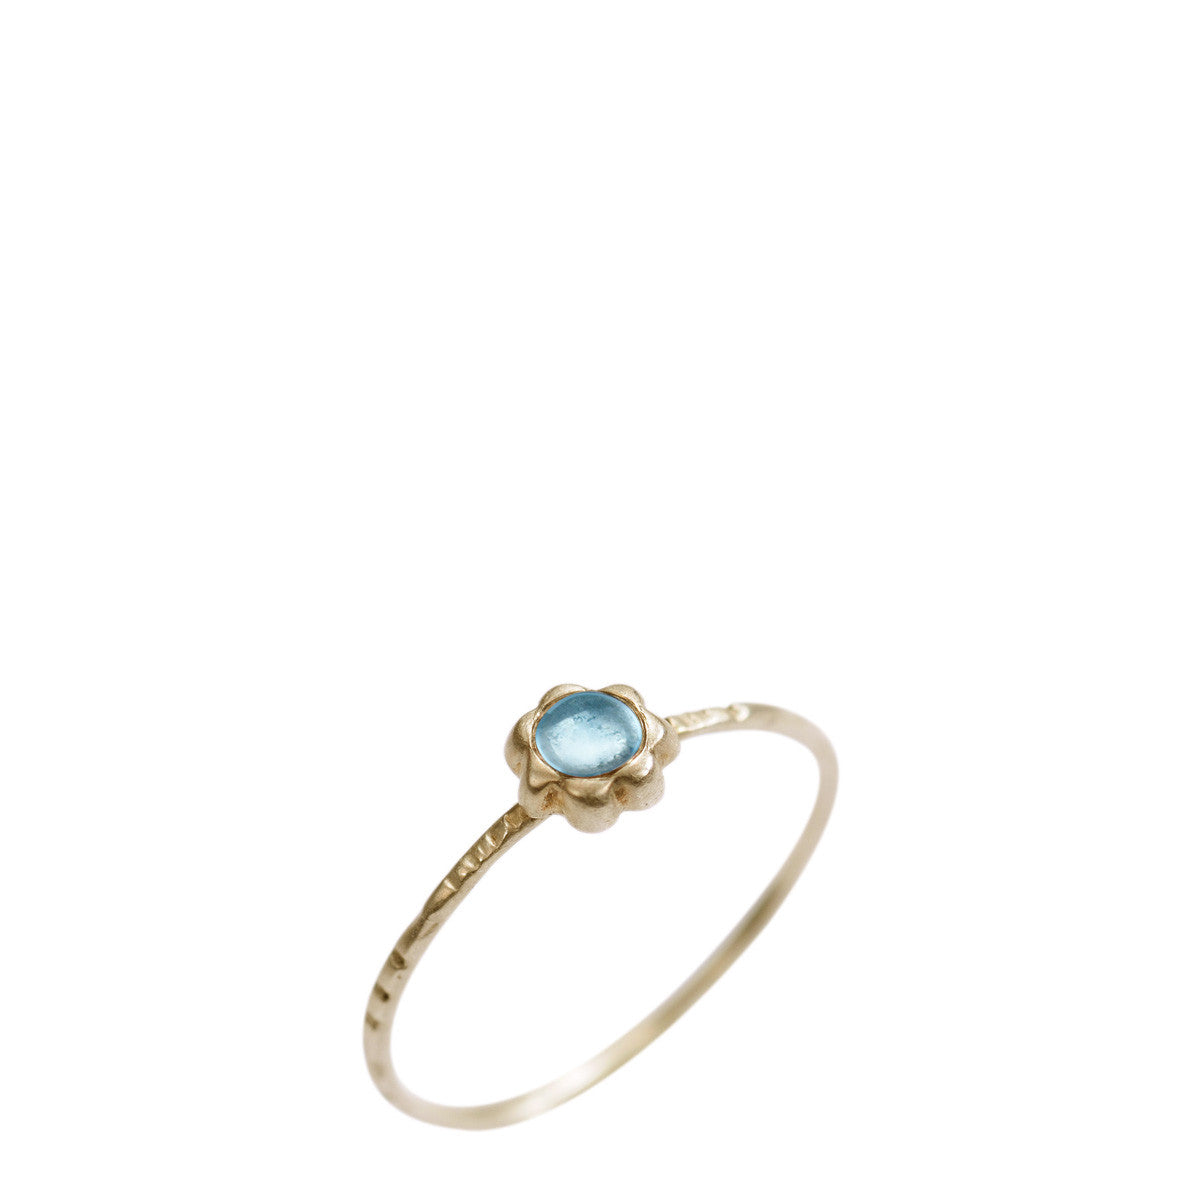 10K Gold Star Flower with Blue Topaz Ring